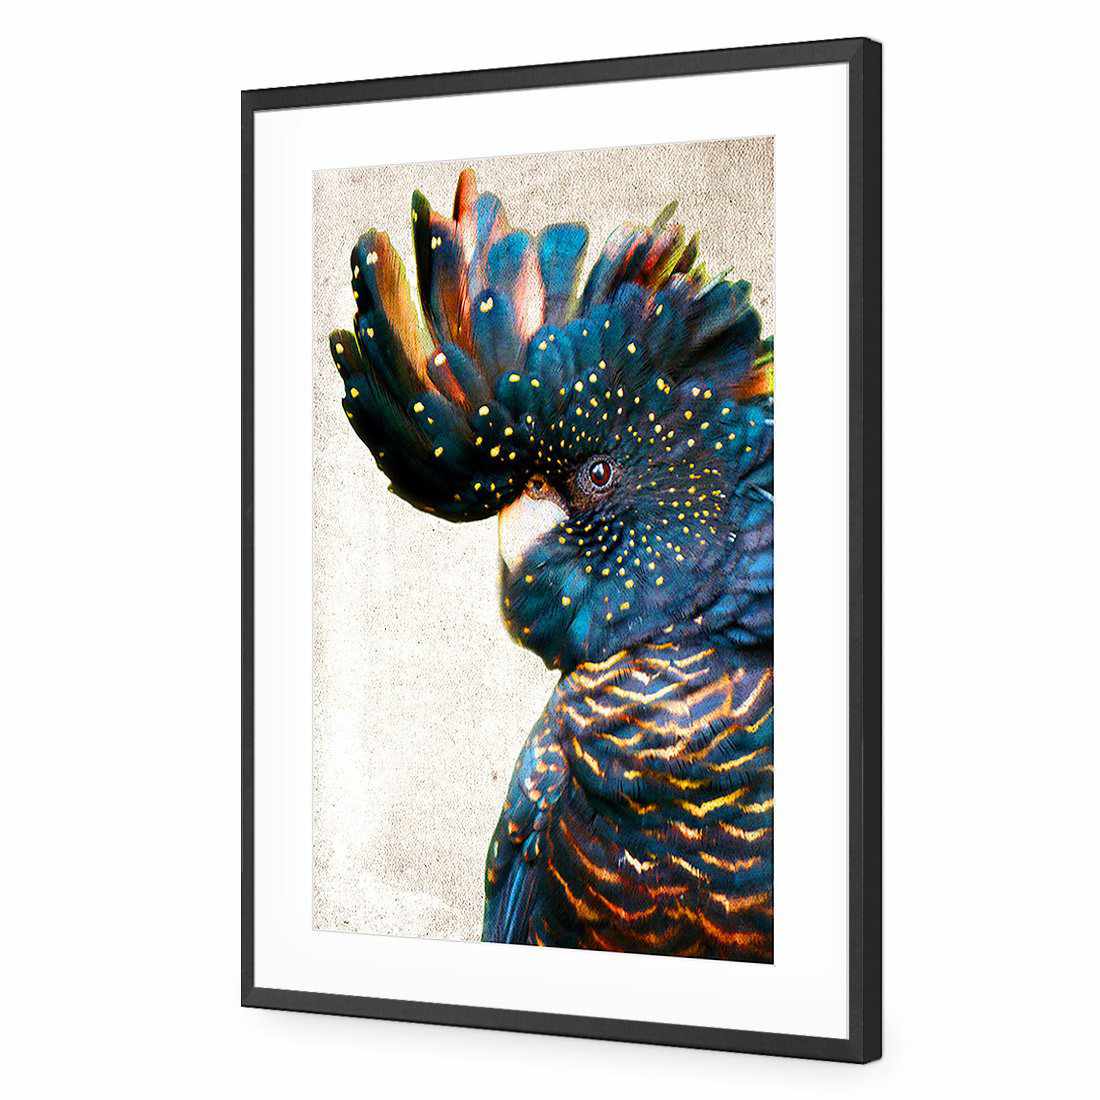 Black Cockatoo Side, Grunge Acrylic Glass Art-Acrylic-Wall Art Designs-With Border-Acrylic - Black Frame-45x30cm-Wall Art Designs